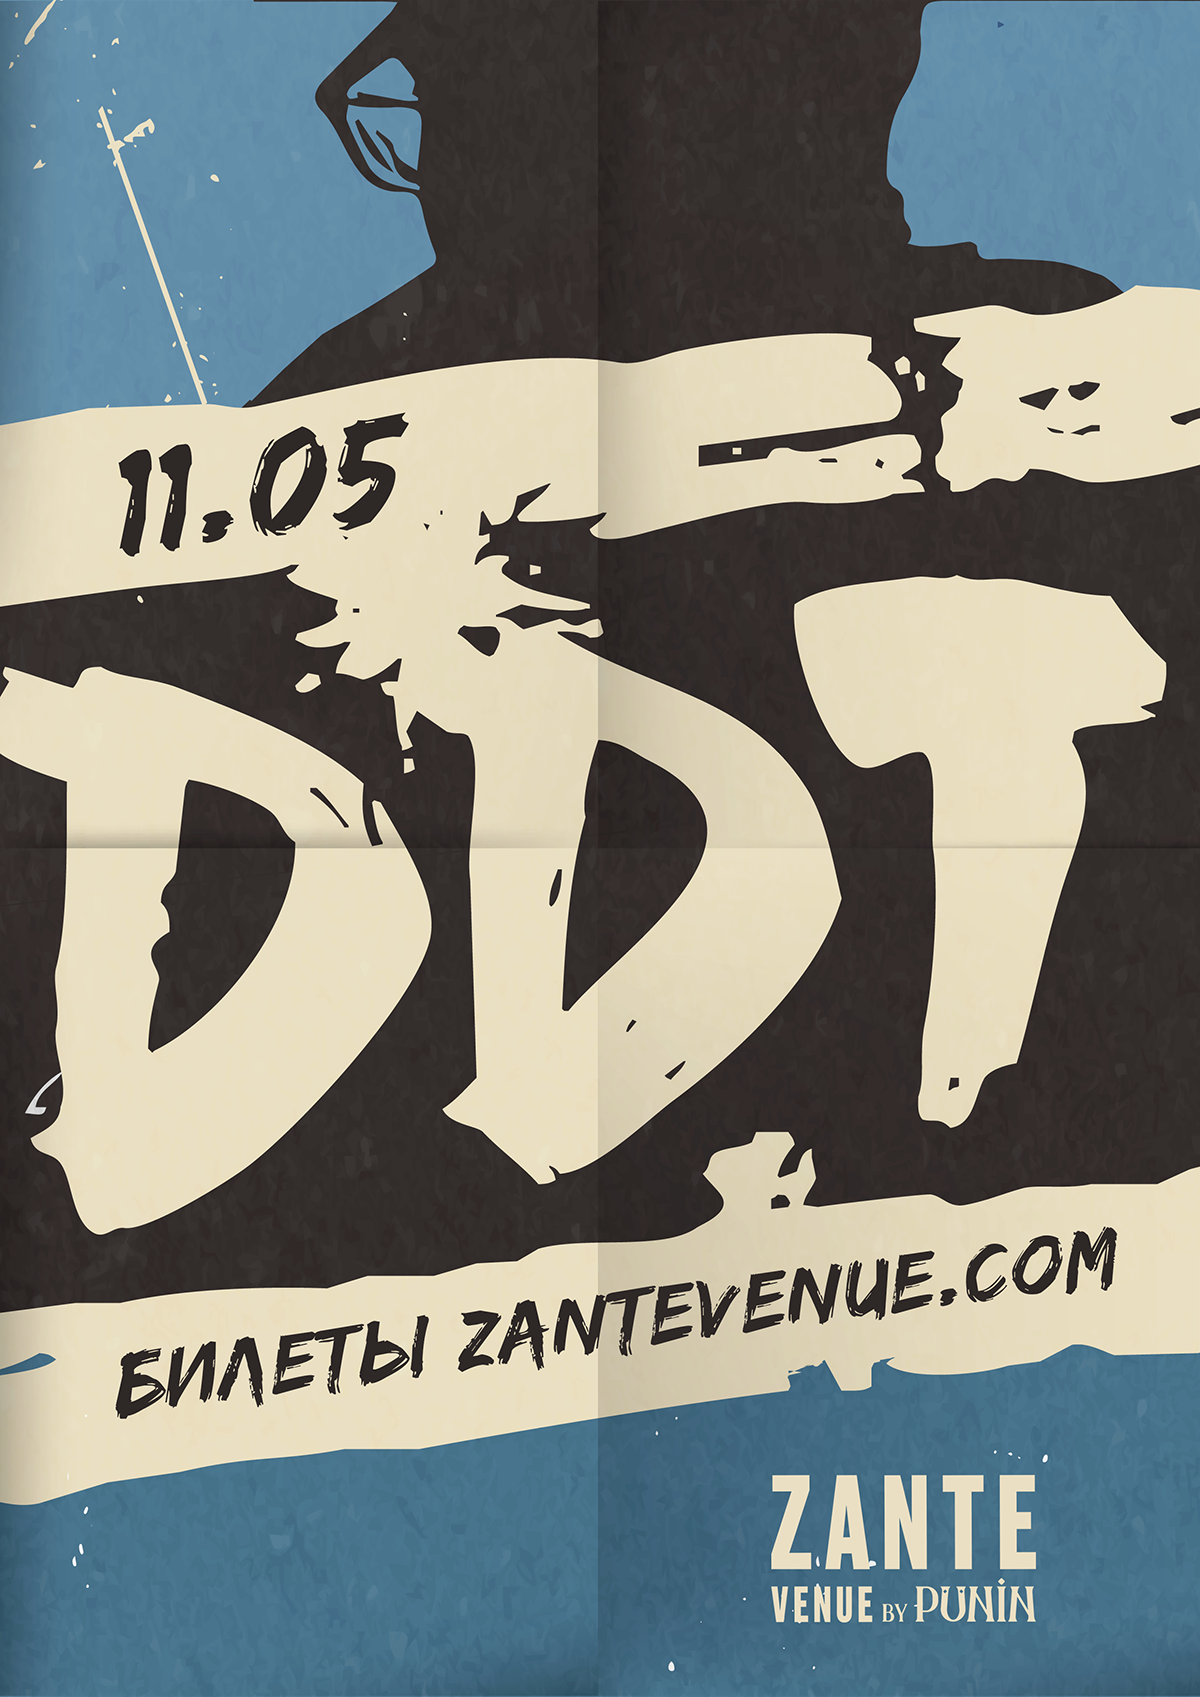 DDT - NEW DATE